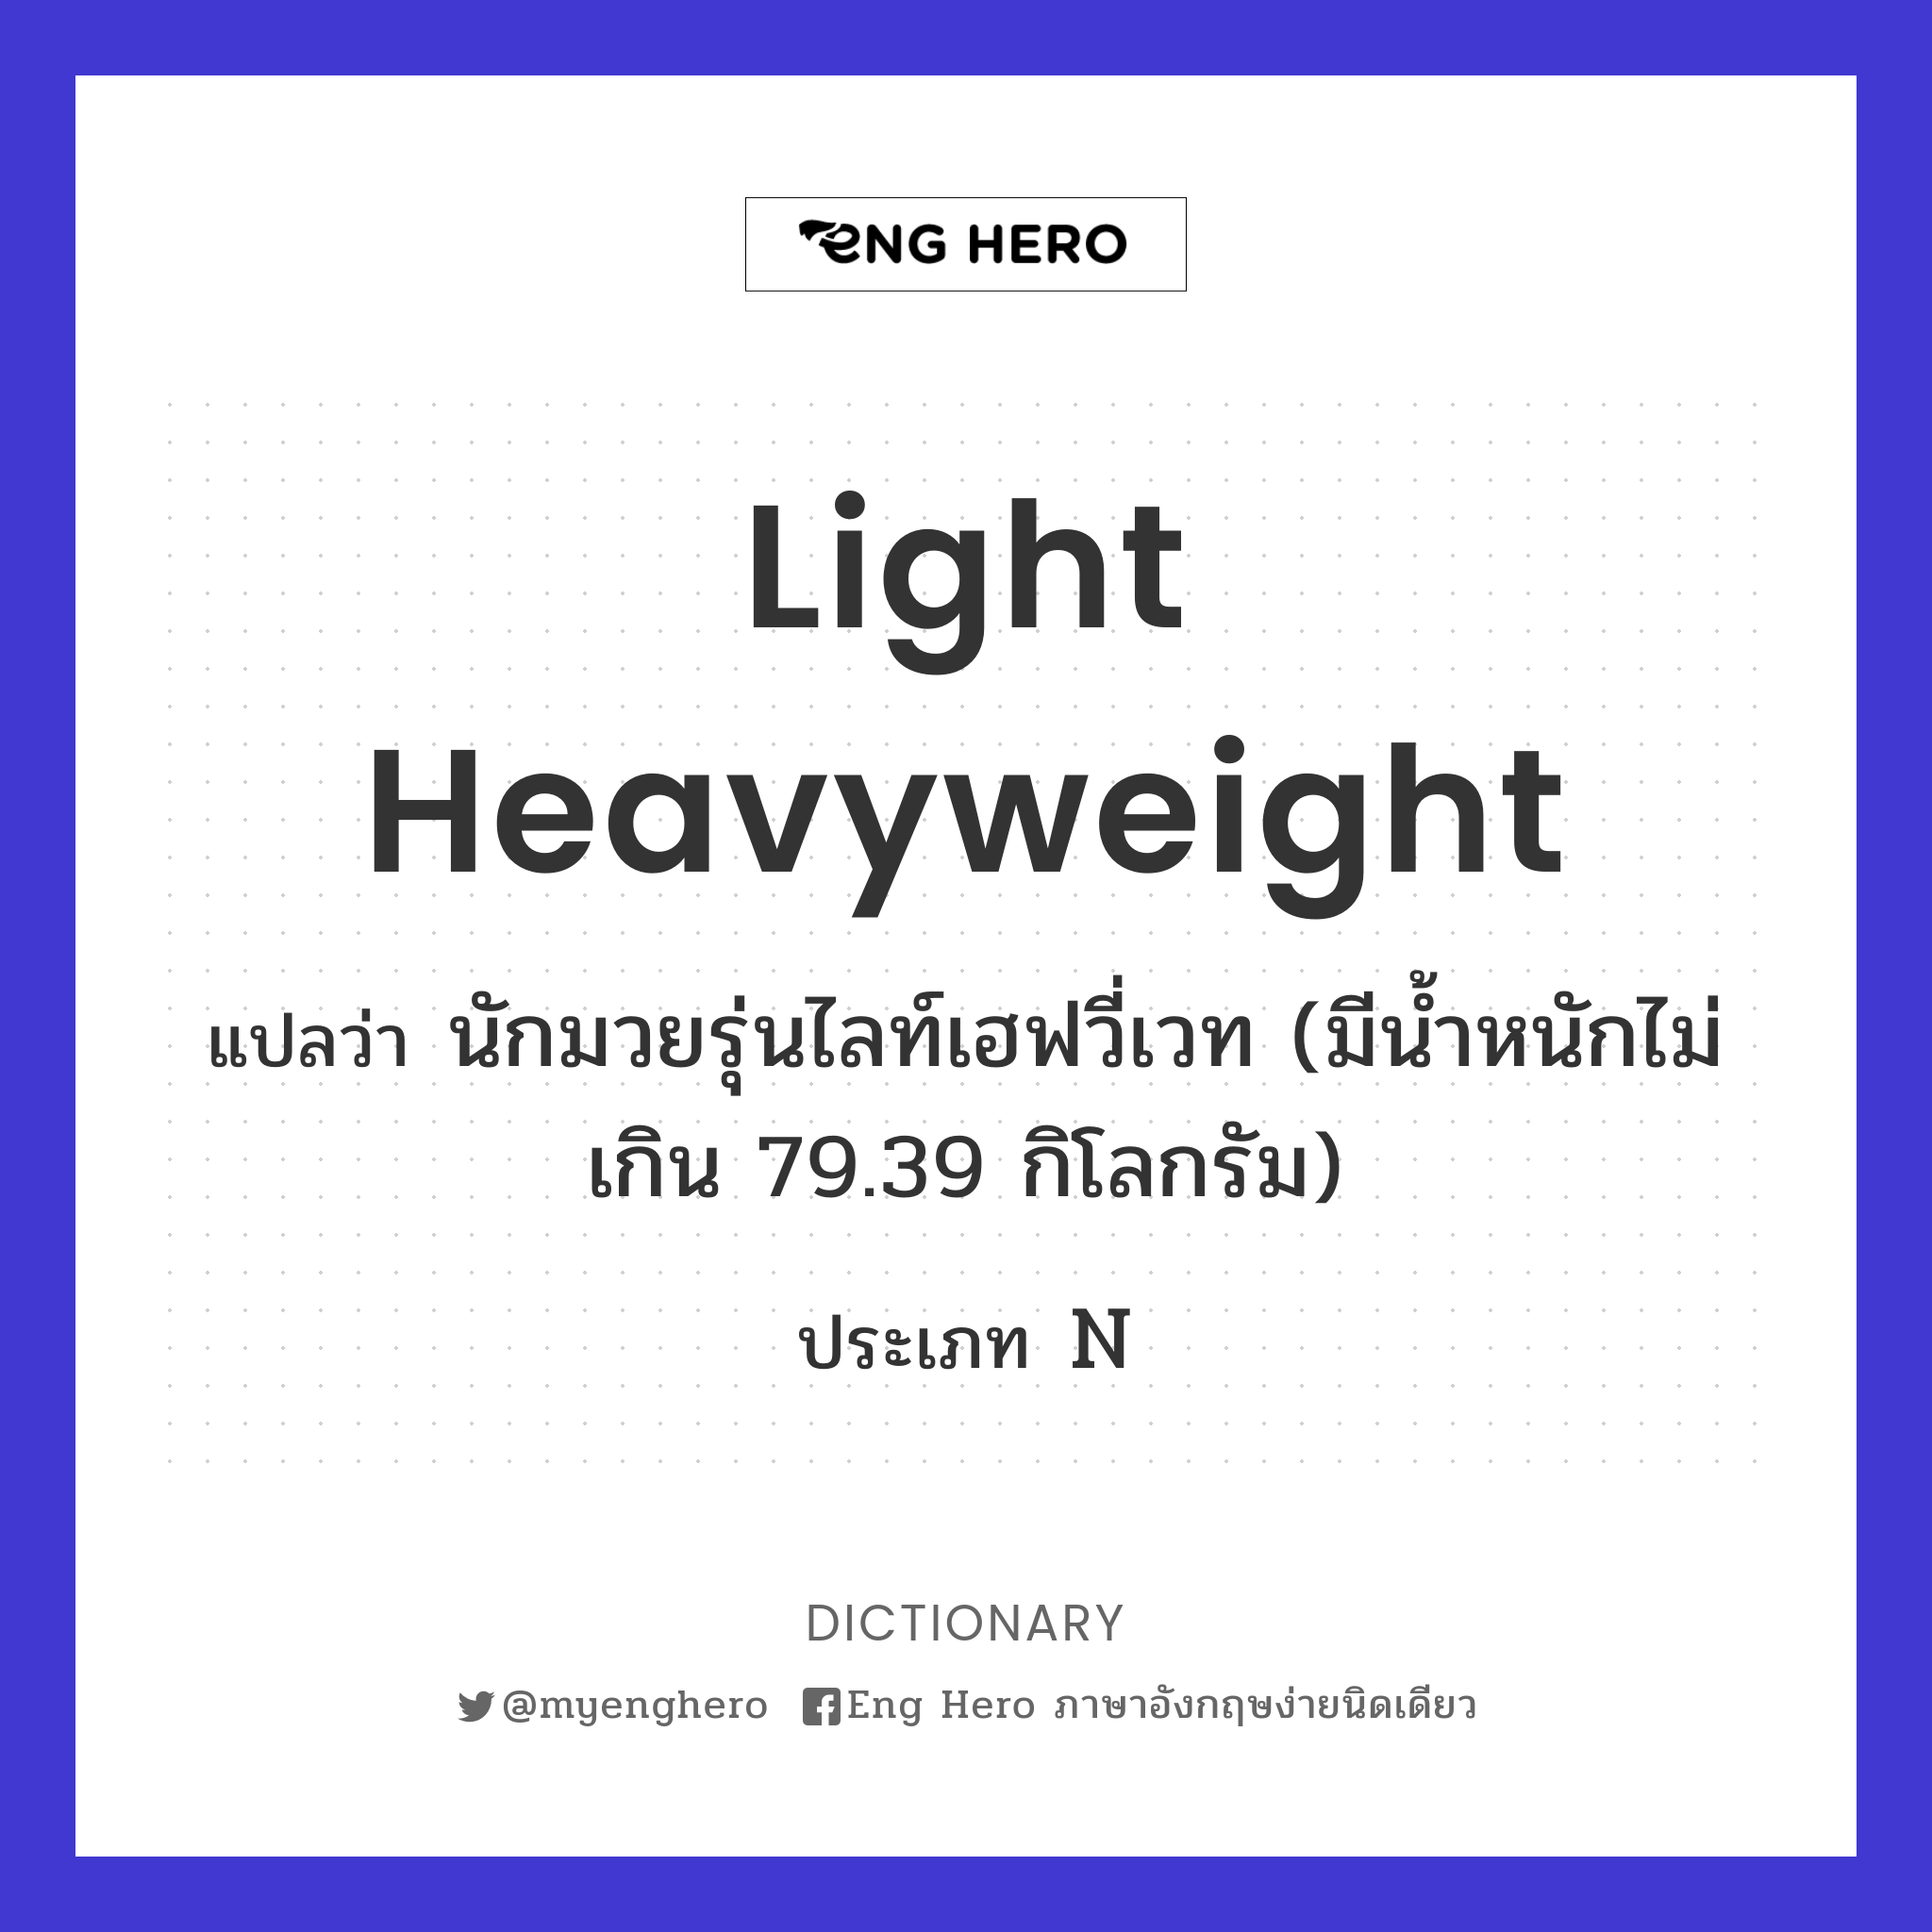 light heavyweight